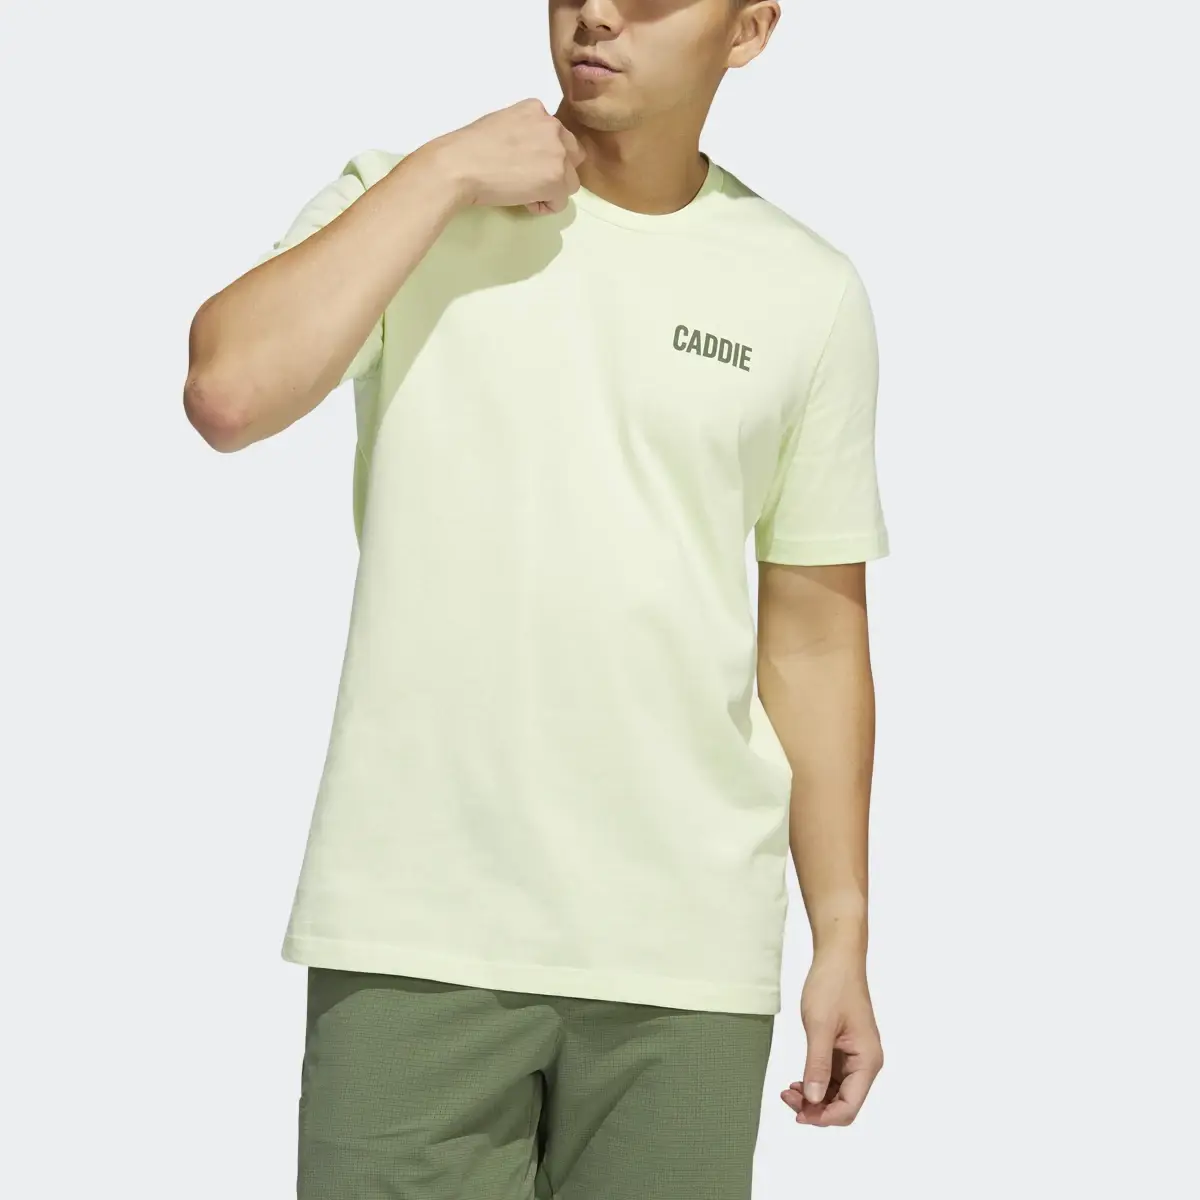 Adidas Adicross Caddie Golf T-Shirt. 1